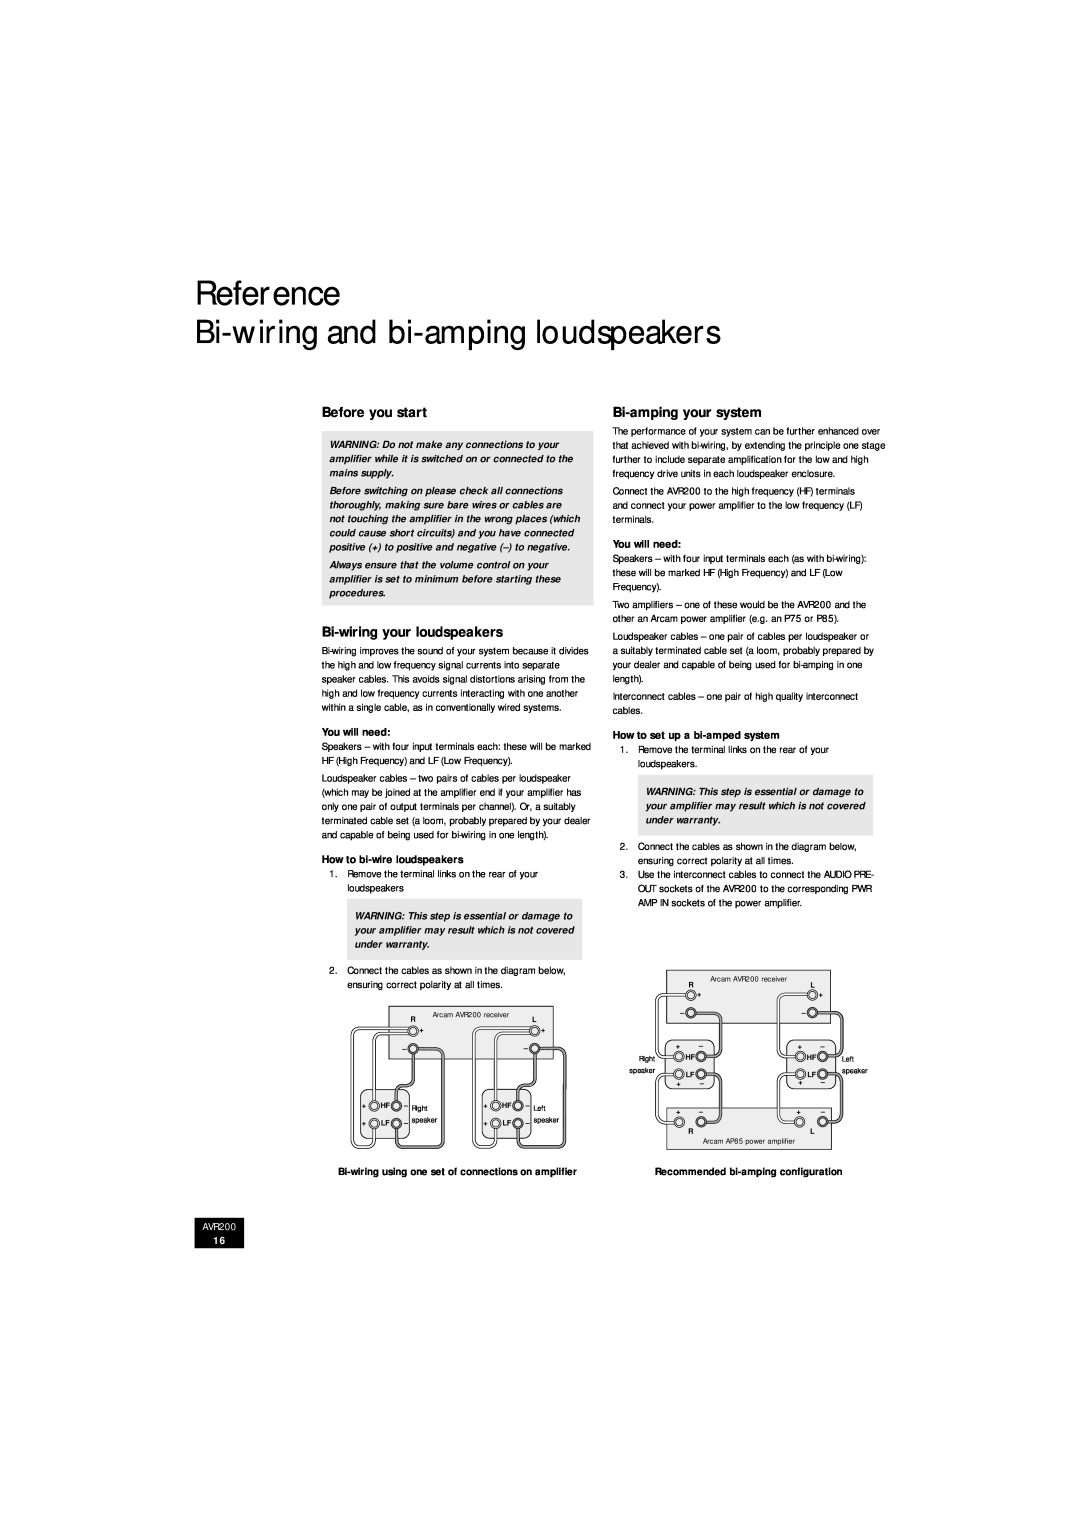 Arcam AVR200 Reference Bi-wiringand bi-ampingloudspeakers, Before you start, Bi-wiringyour loudspeakers, You will need 